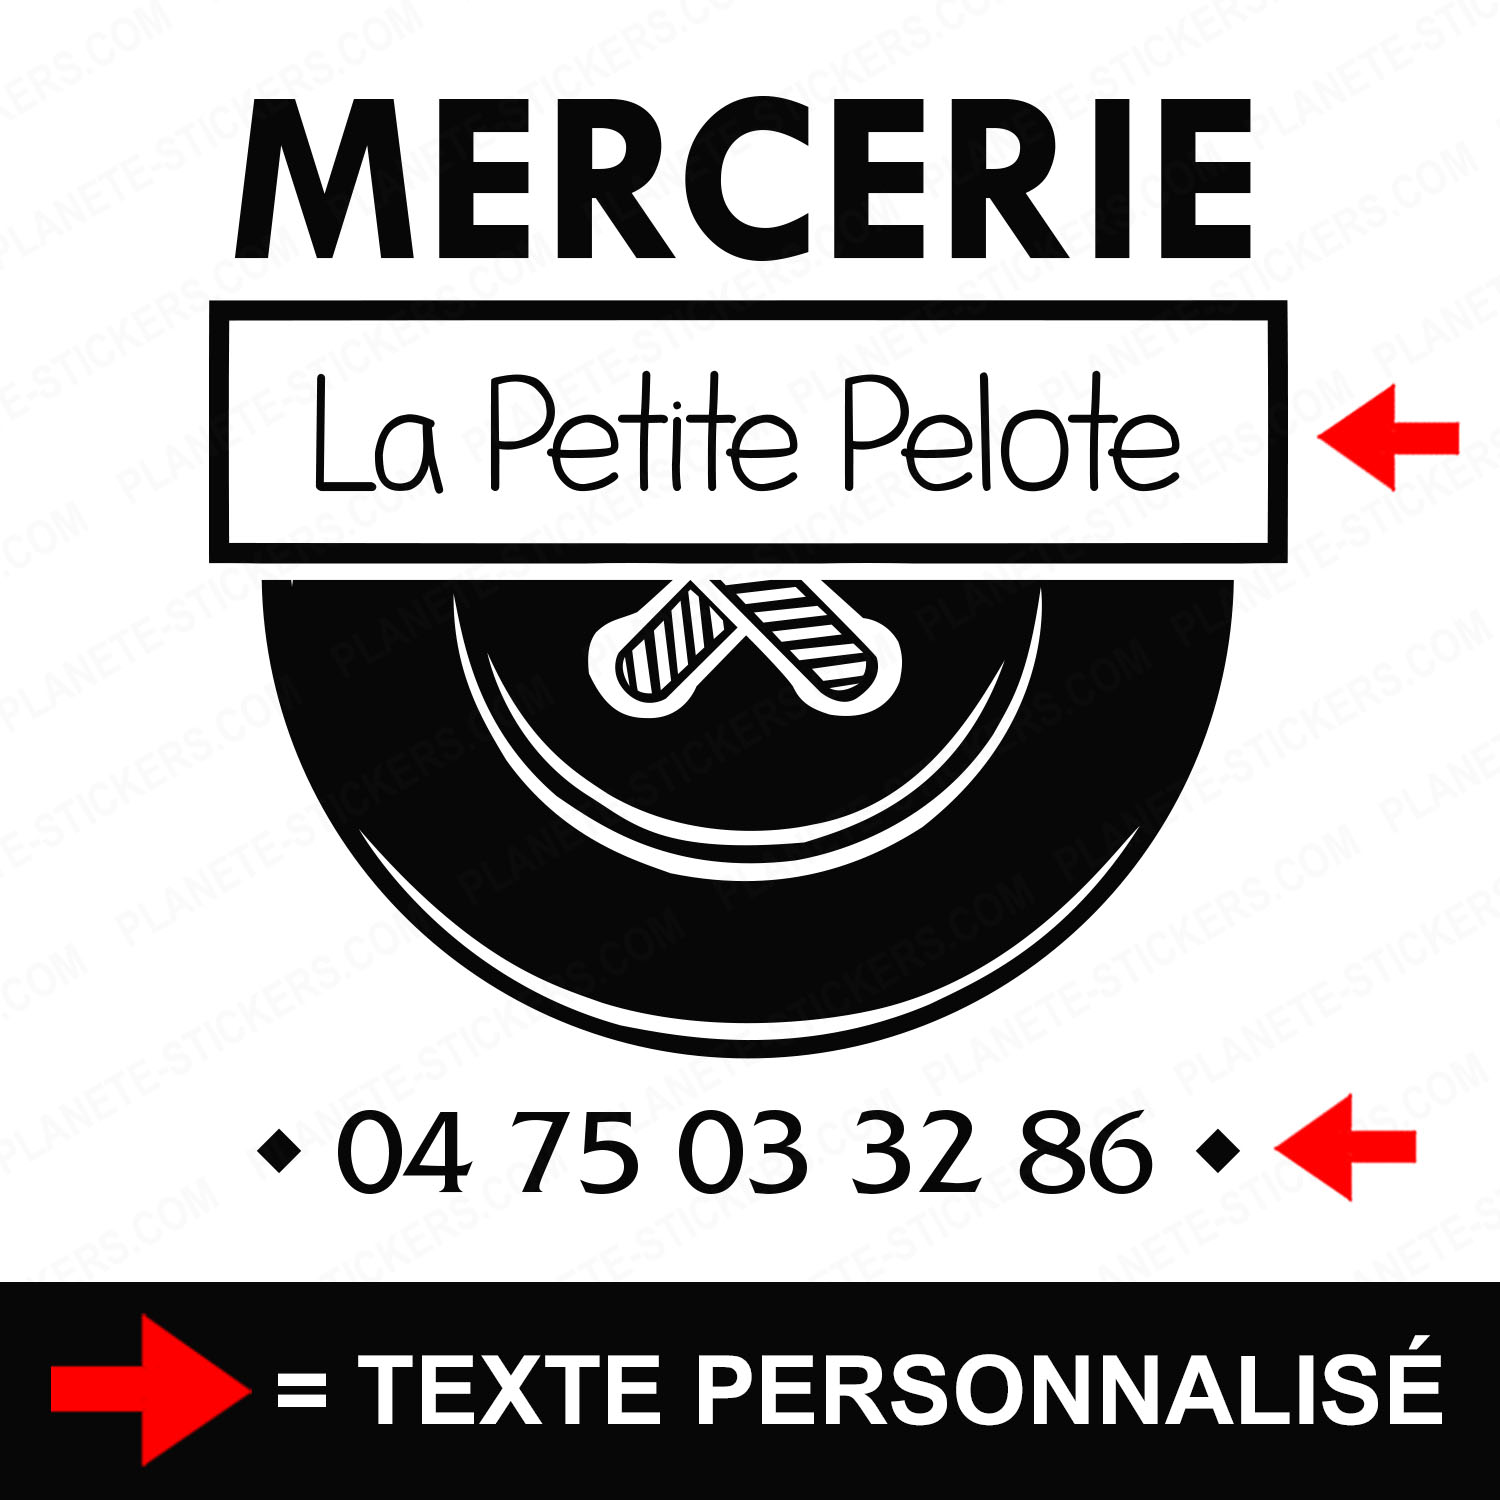 ref4mercerievitrine-stickers-mercerie-vitrine-sticker-personnalisé-mercier-autocollant-logo-bouton-2